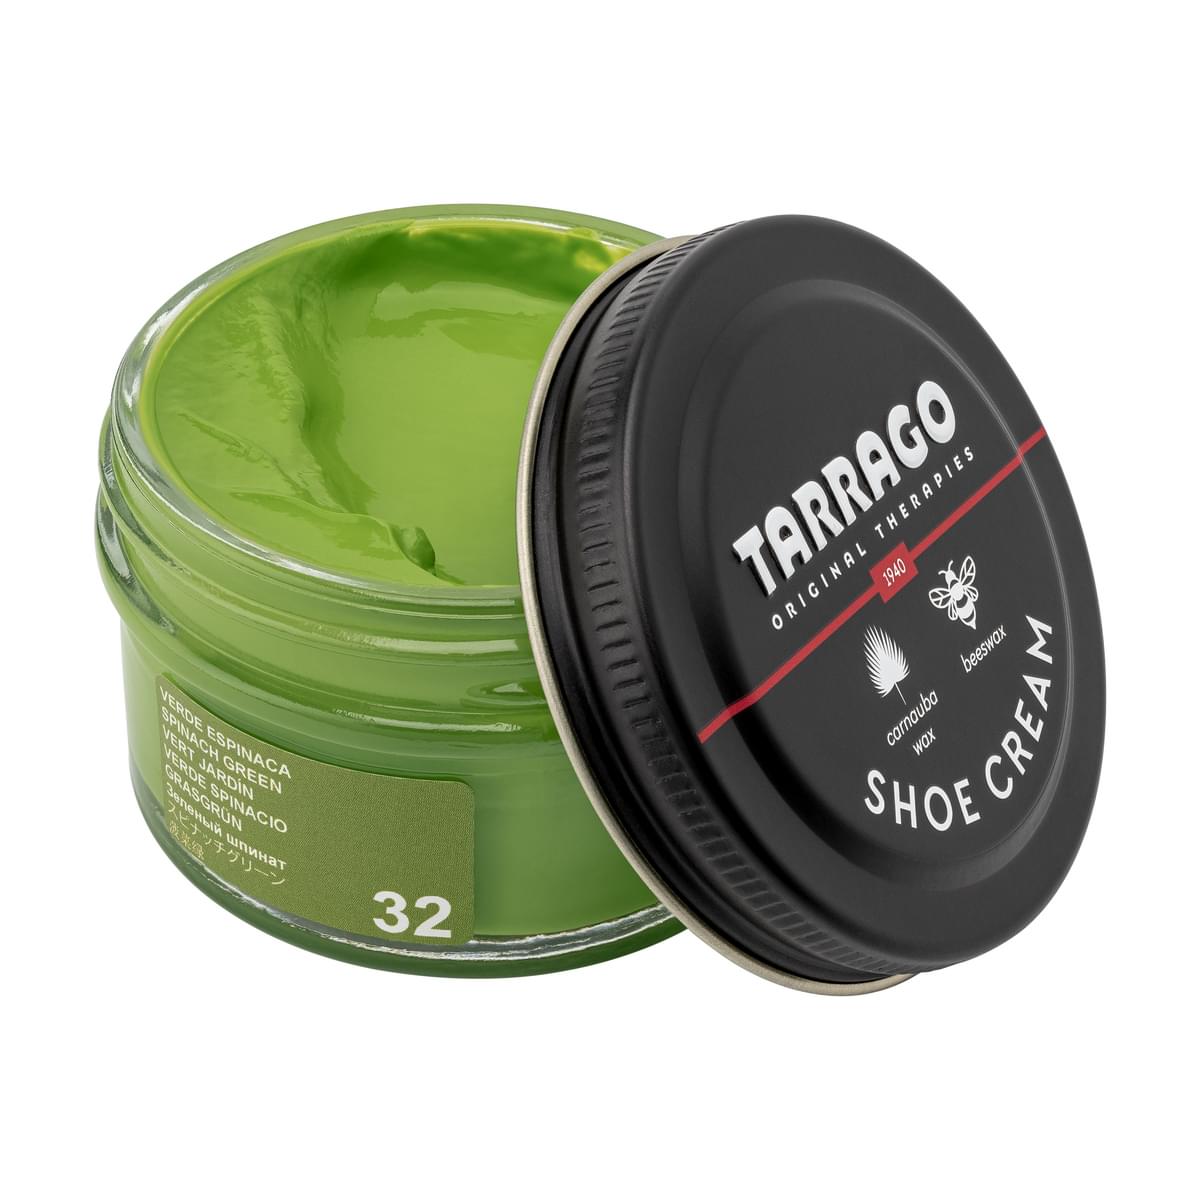 Tarrago Shoe Cream  - Spinach Green - 32